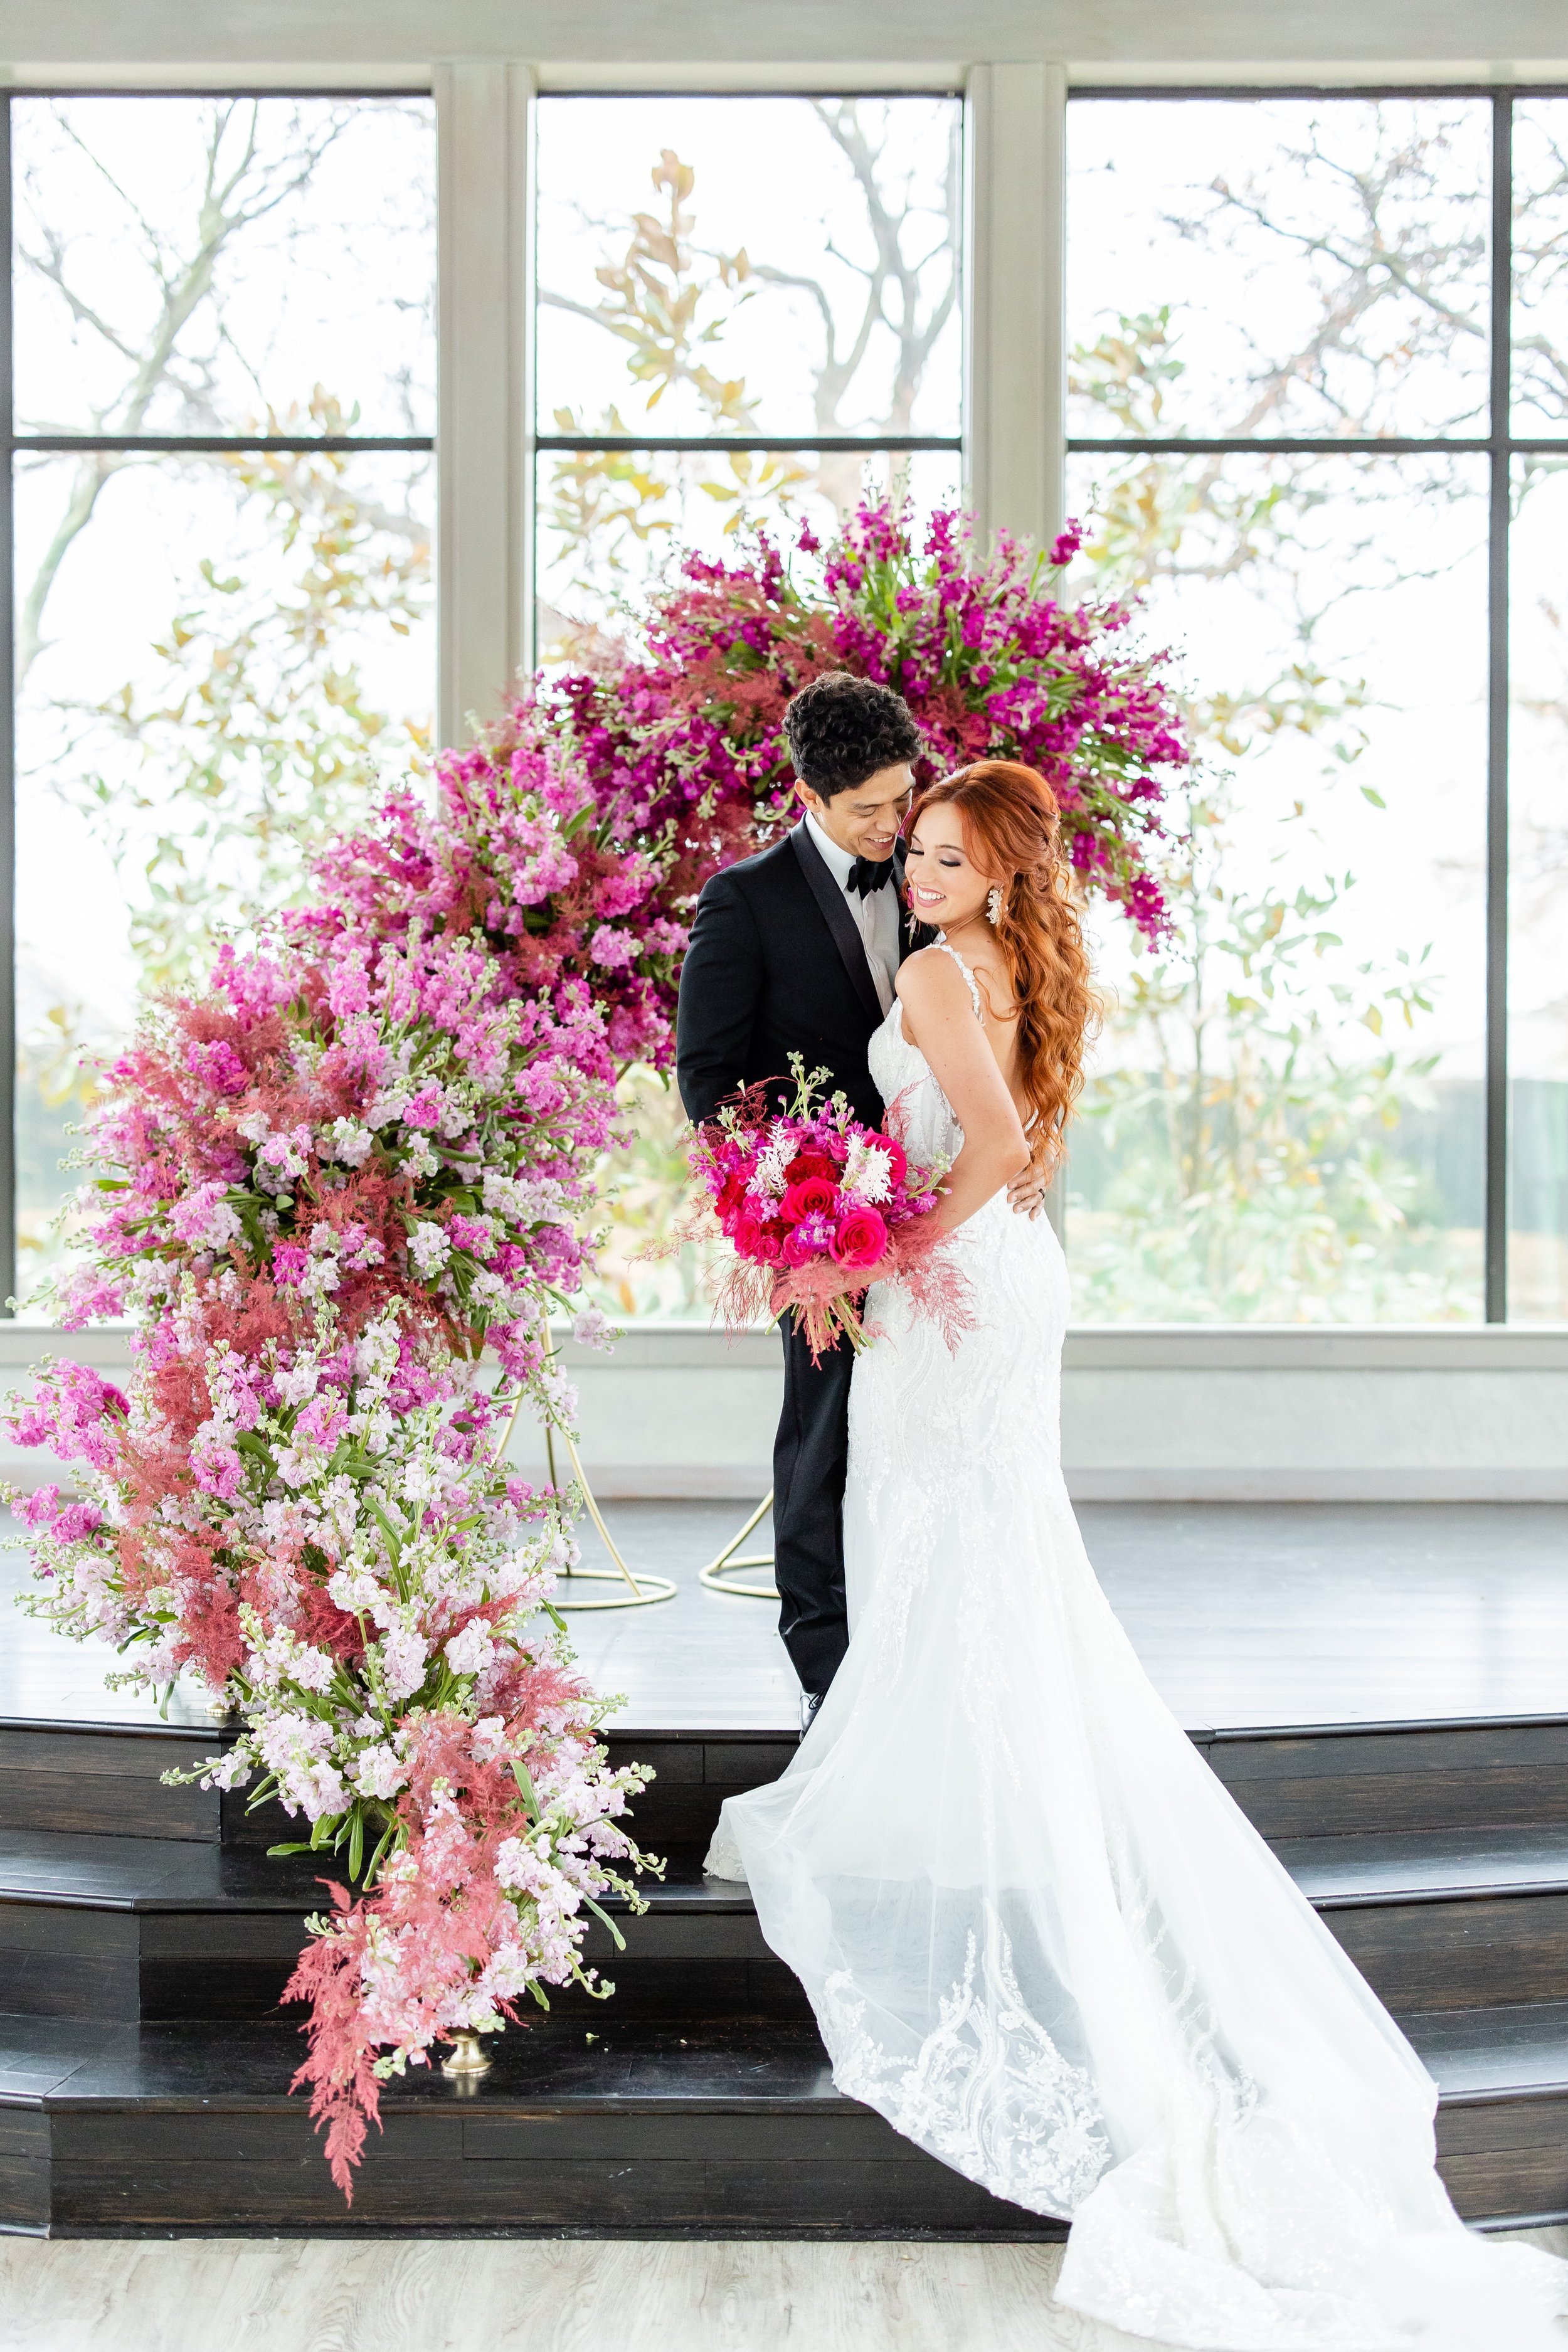 www.brightonabbey.com-wedding-venue-ceremony-chapel-cathedral-pews-stairs-altar-floral.jpg